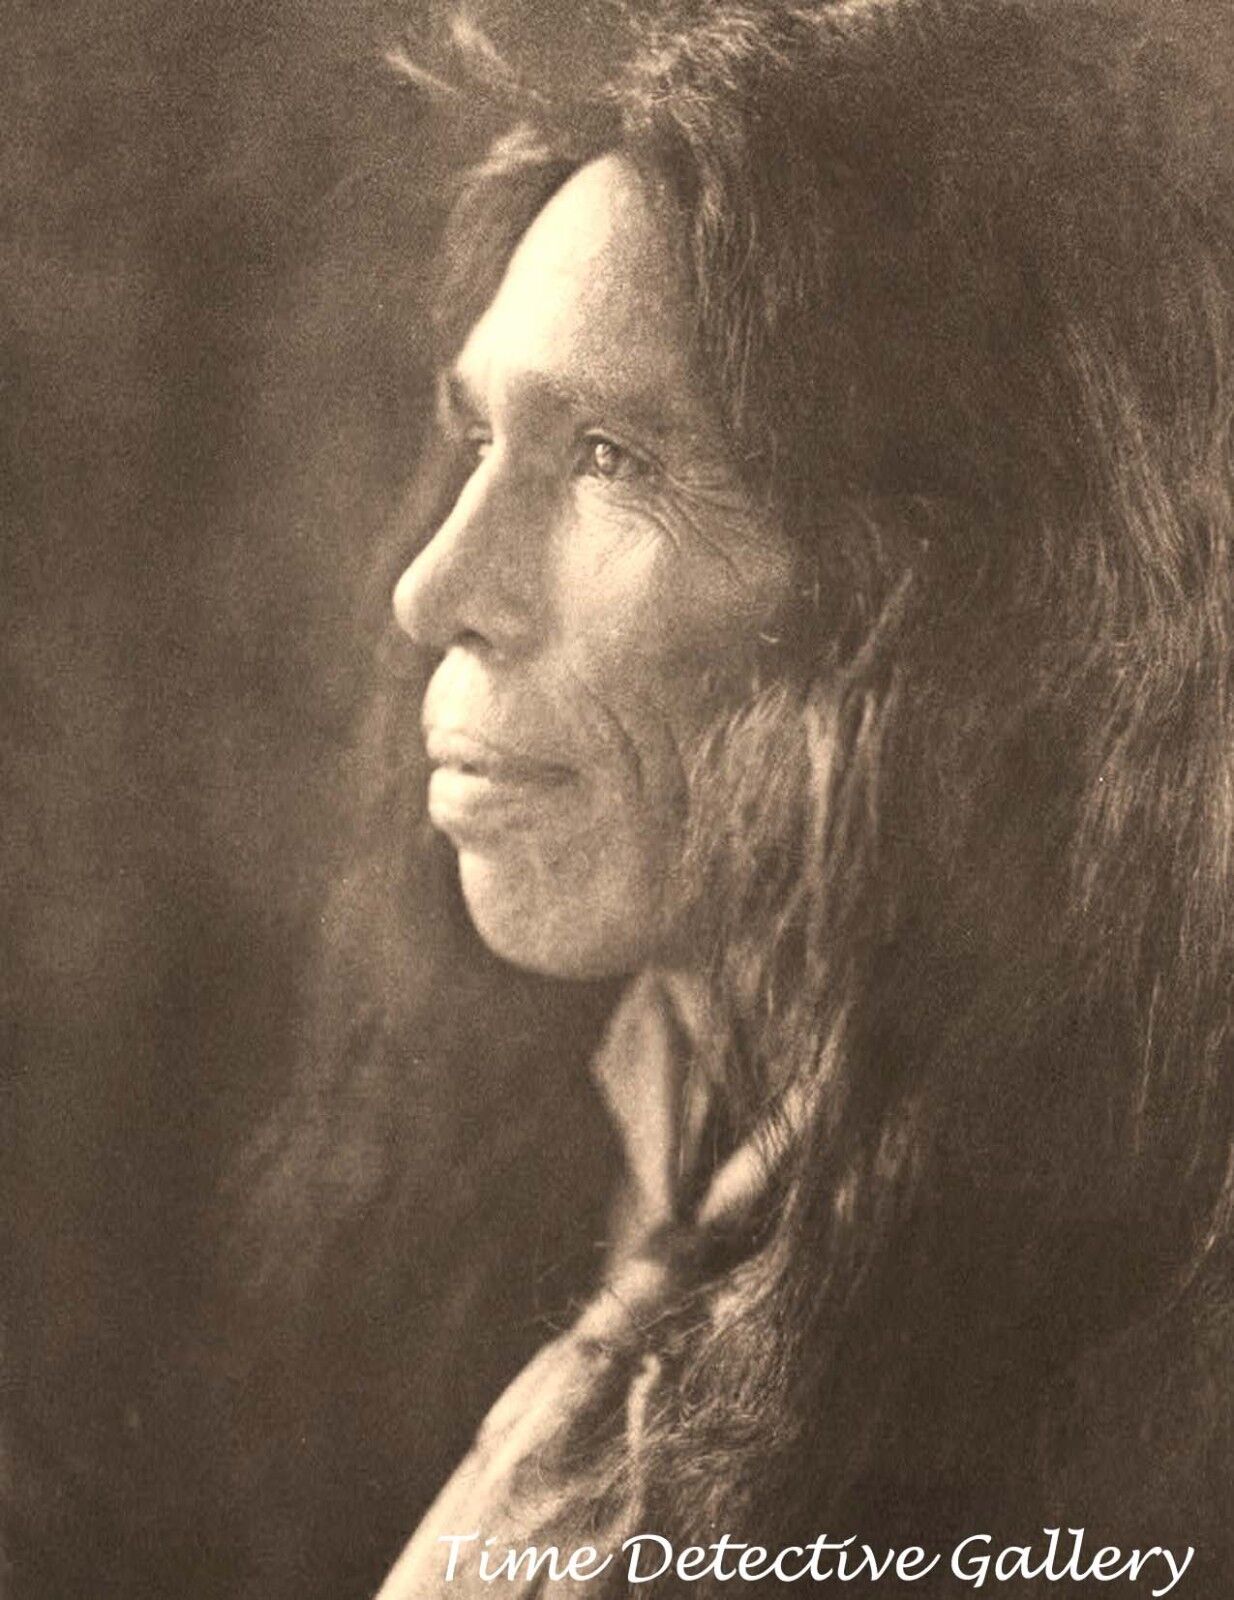 Pomo Indian Man, California - Historic Photo Print